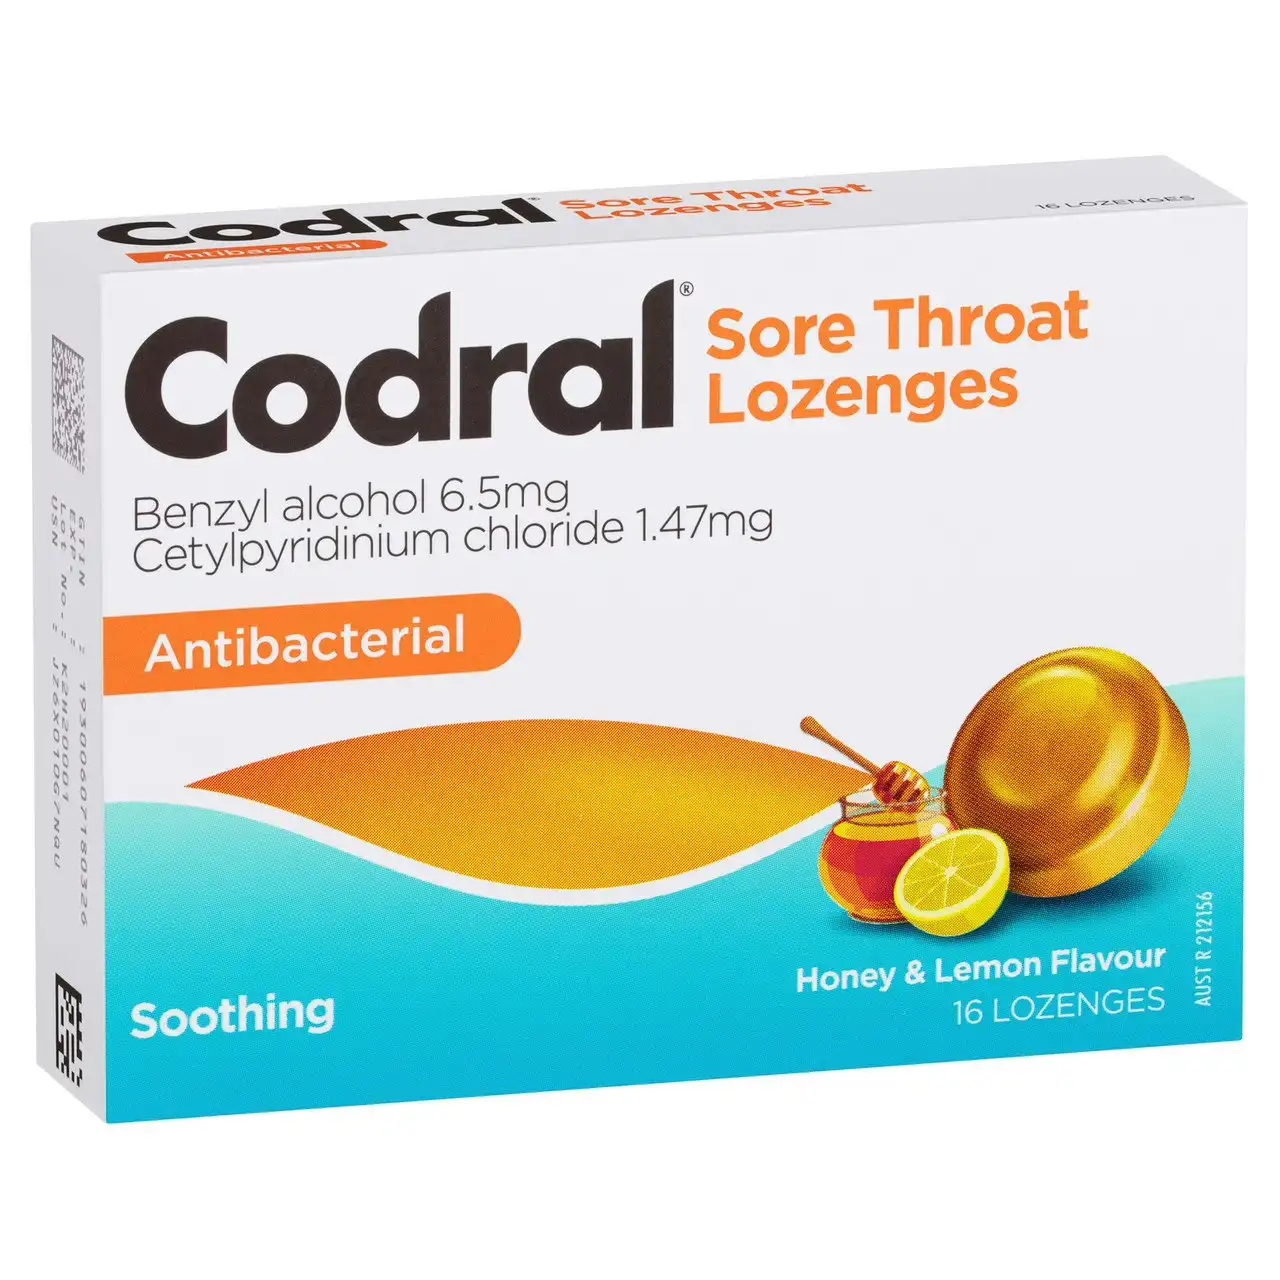 CODRAL Sore Throat Relief Lozenges Antibacterial Honey & Lemon 16 Pack